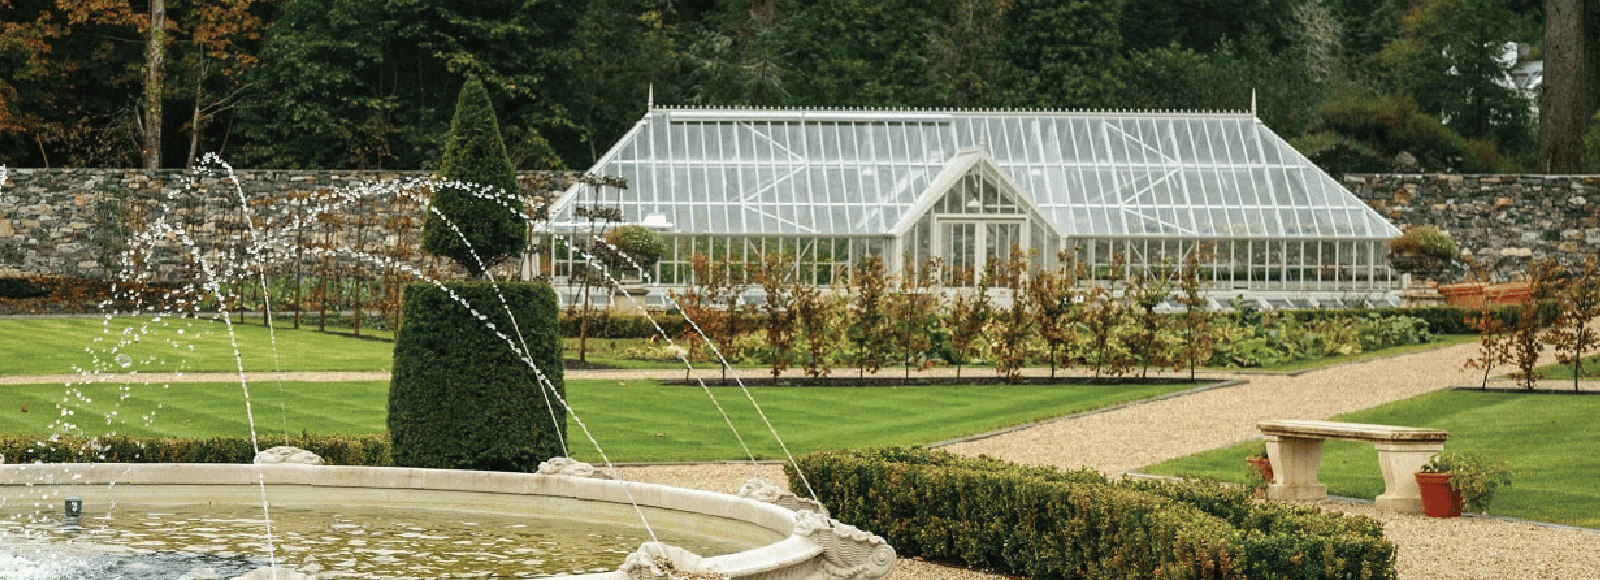 large bespoke greenhouse in walled garden